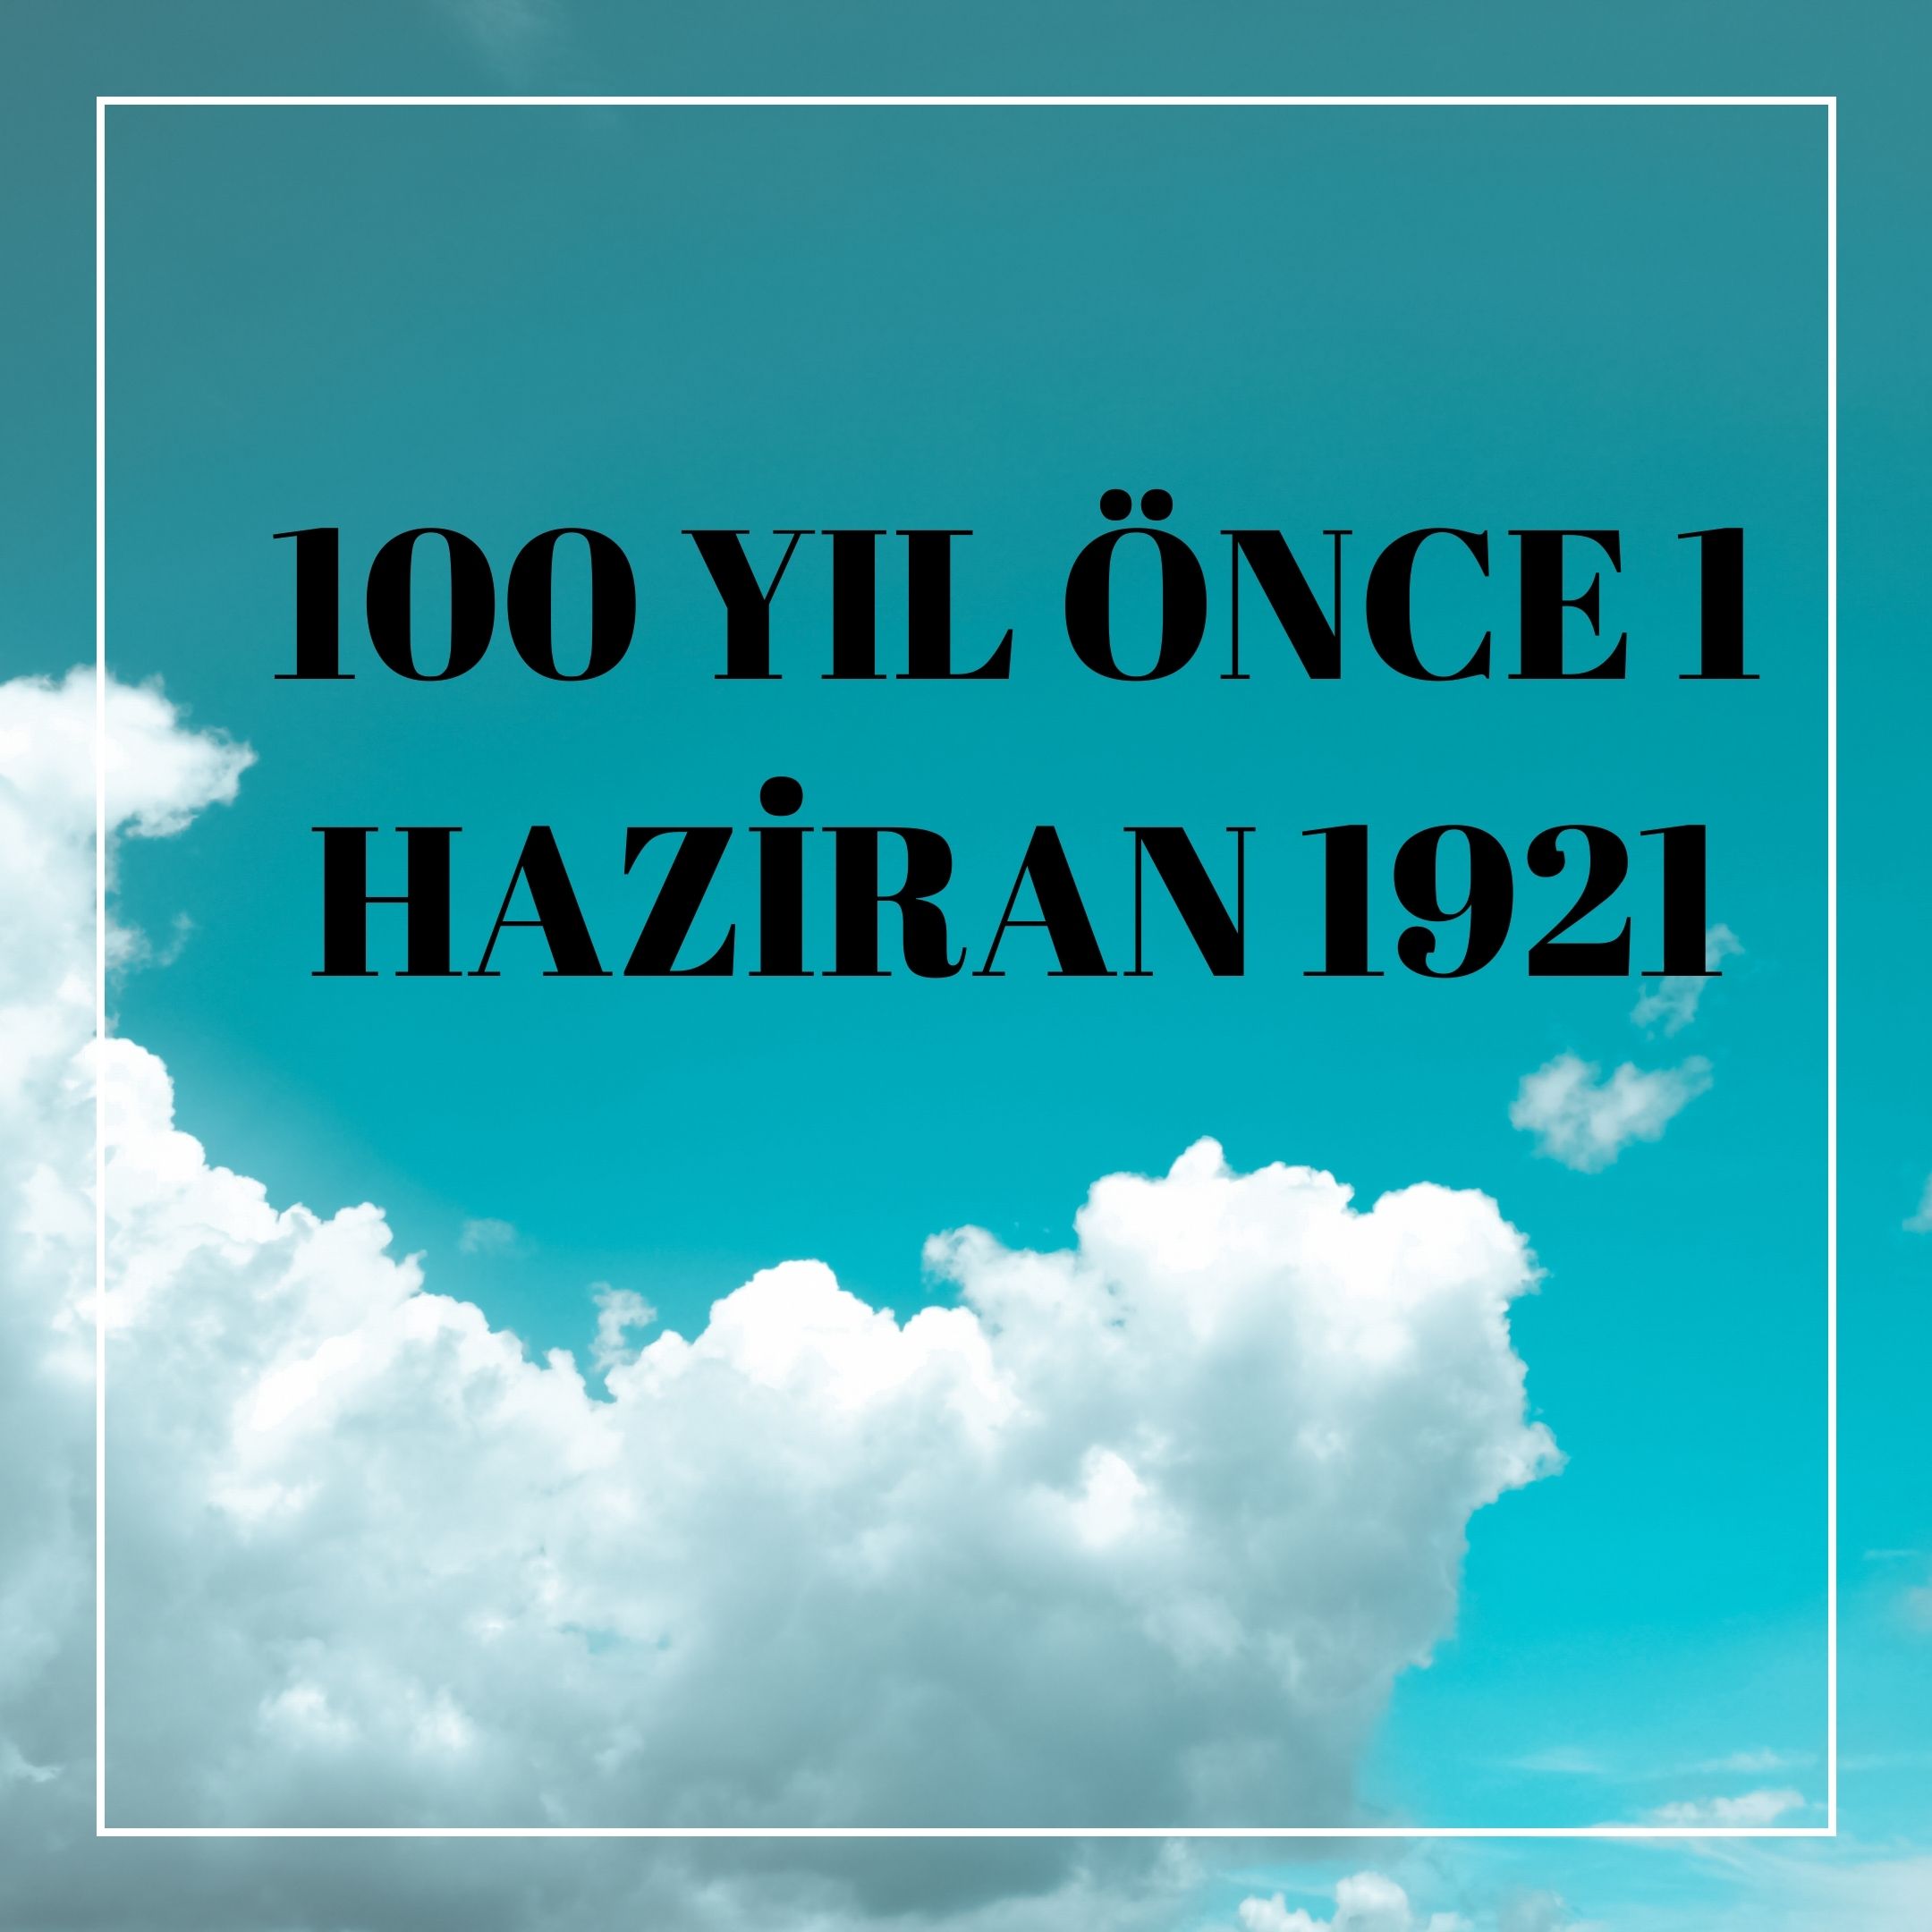 100 YIL ÖNCE 1 HAZİRAN 1921